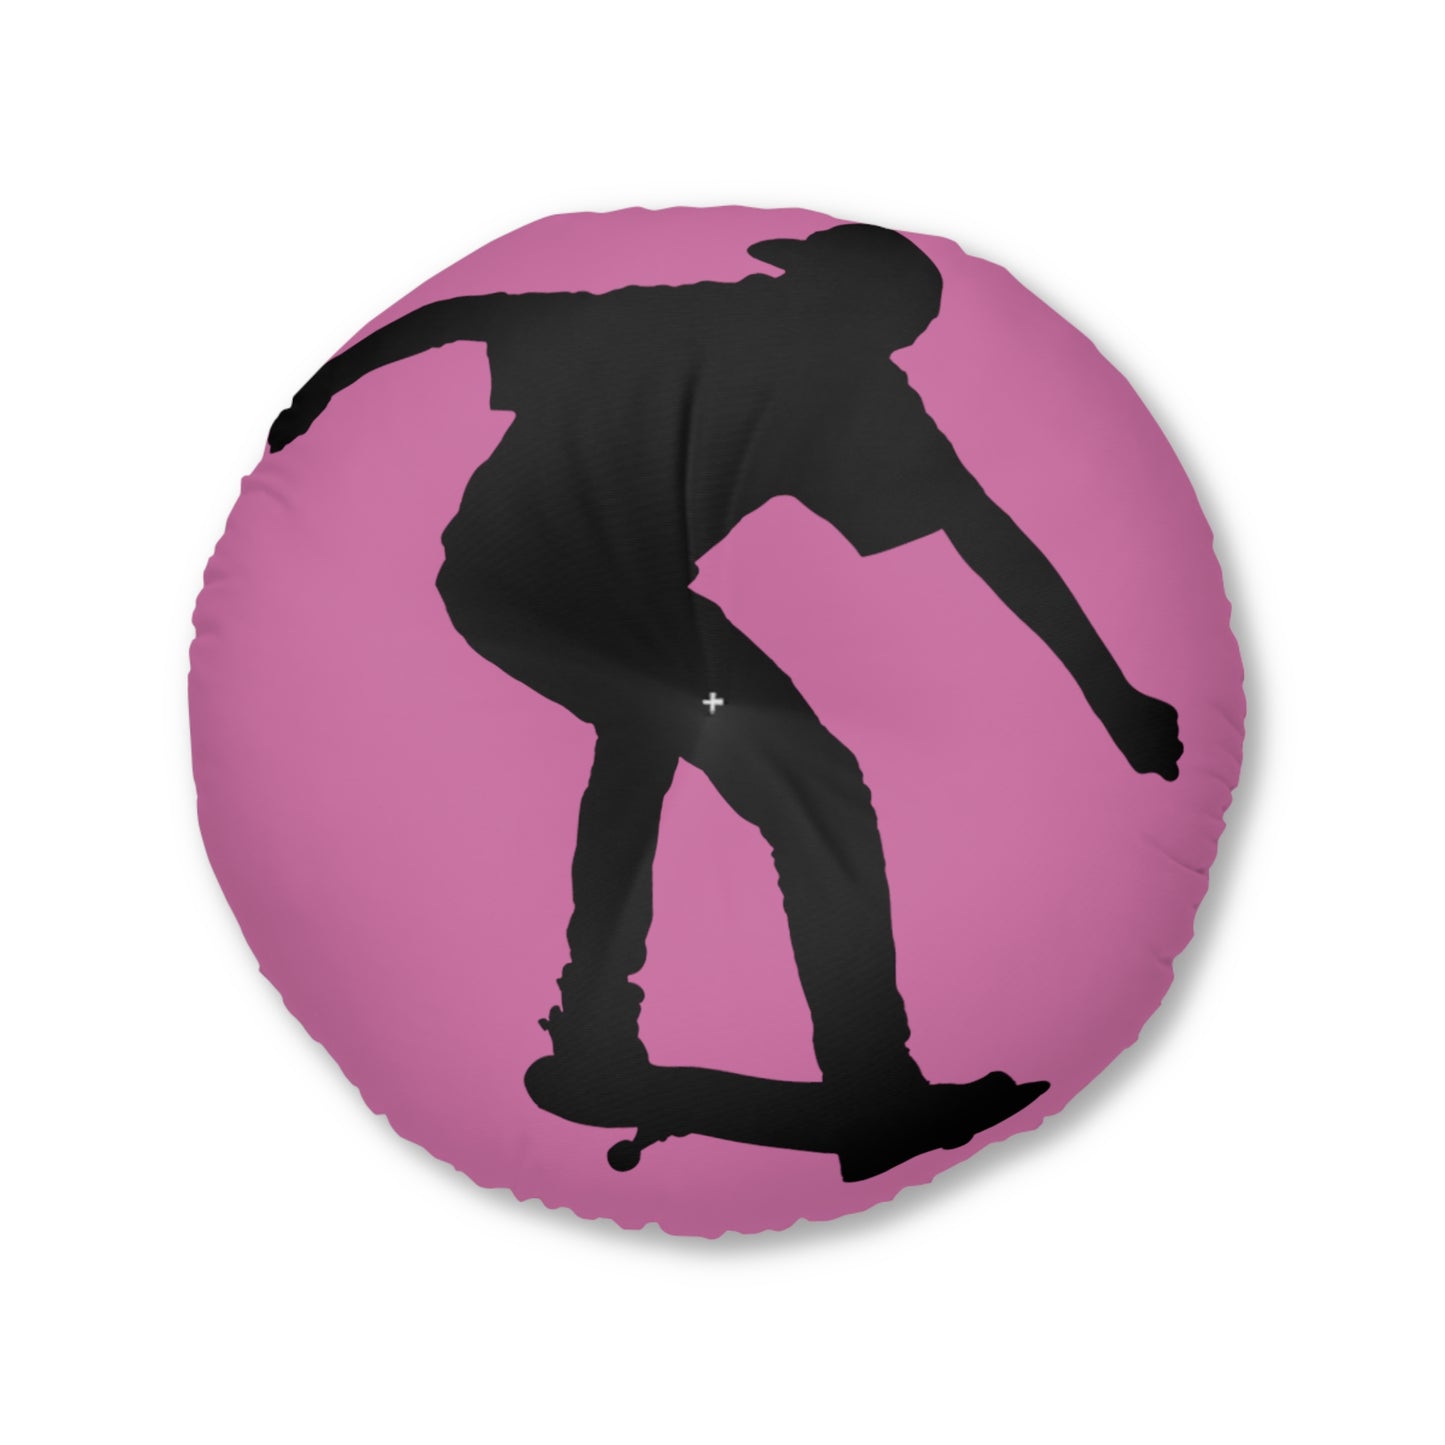 Tufted Floor Pillow, Round: Skateboarding Lite Pink